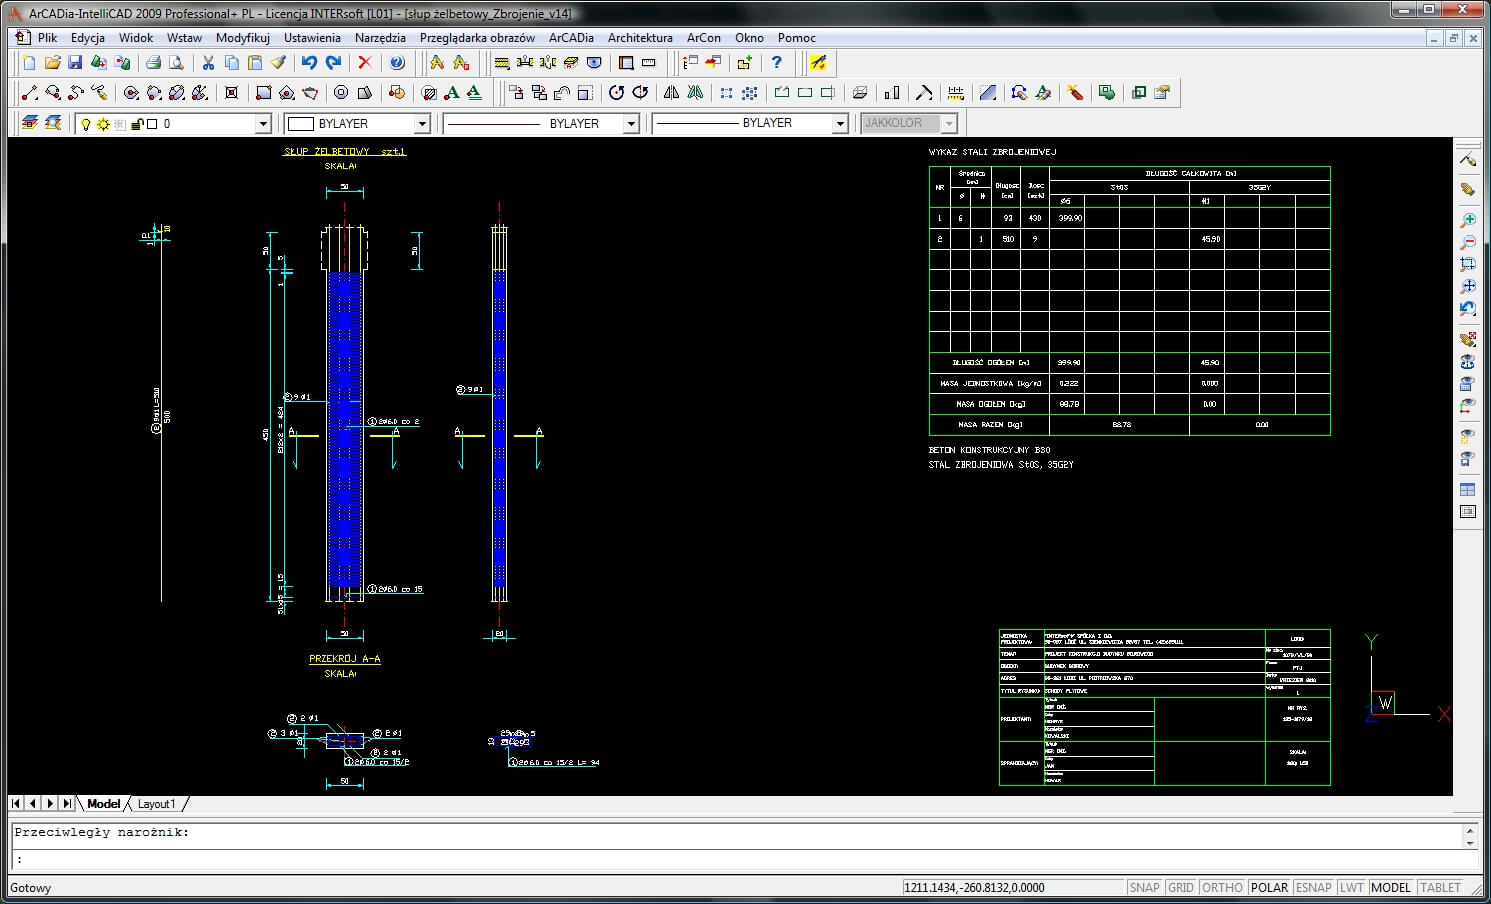 Konstruktor – Rysunki DXF – Sup elbetowy | INTERsoft program CAD